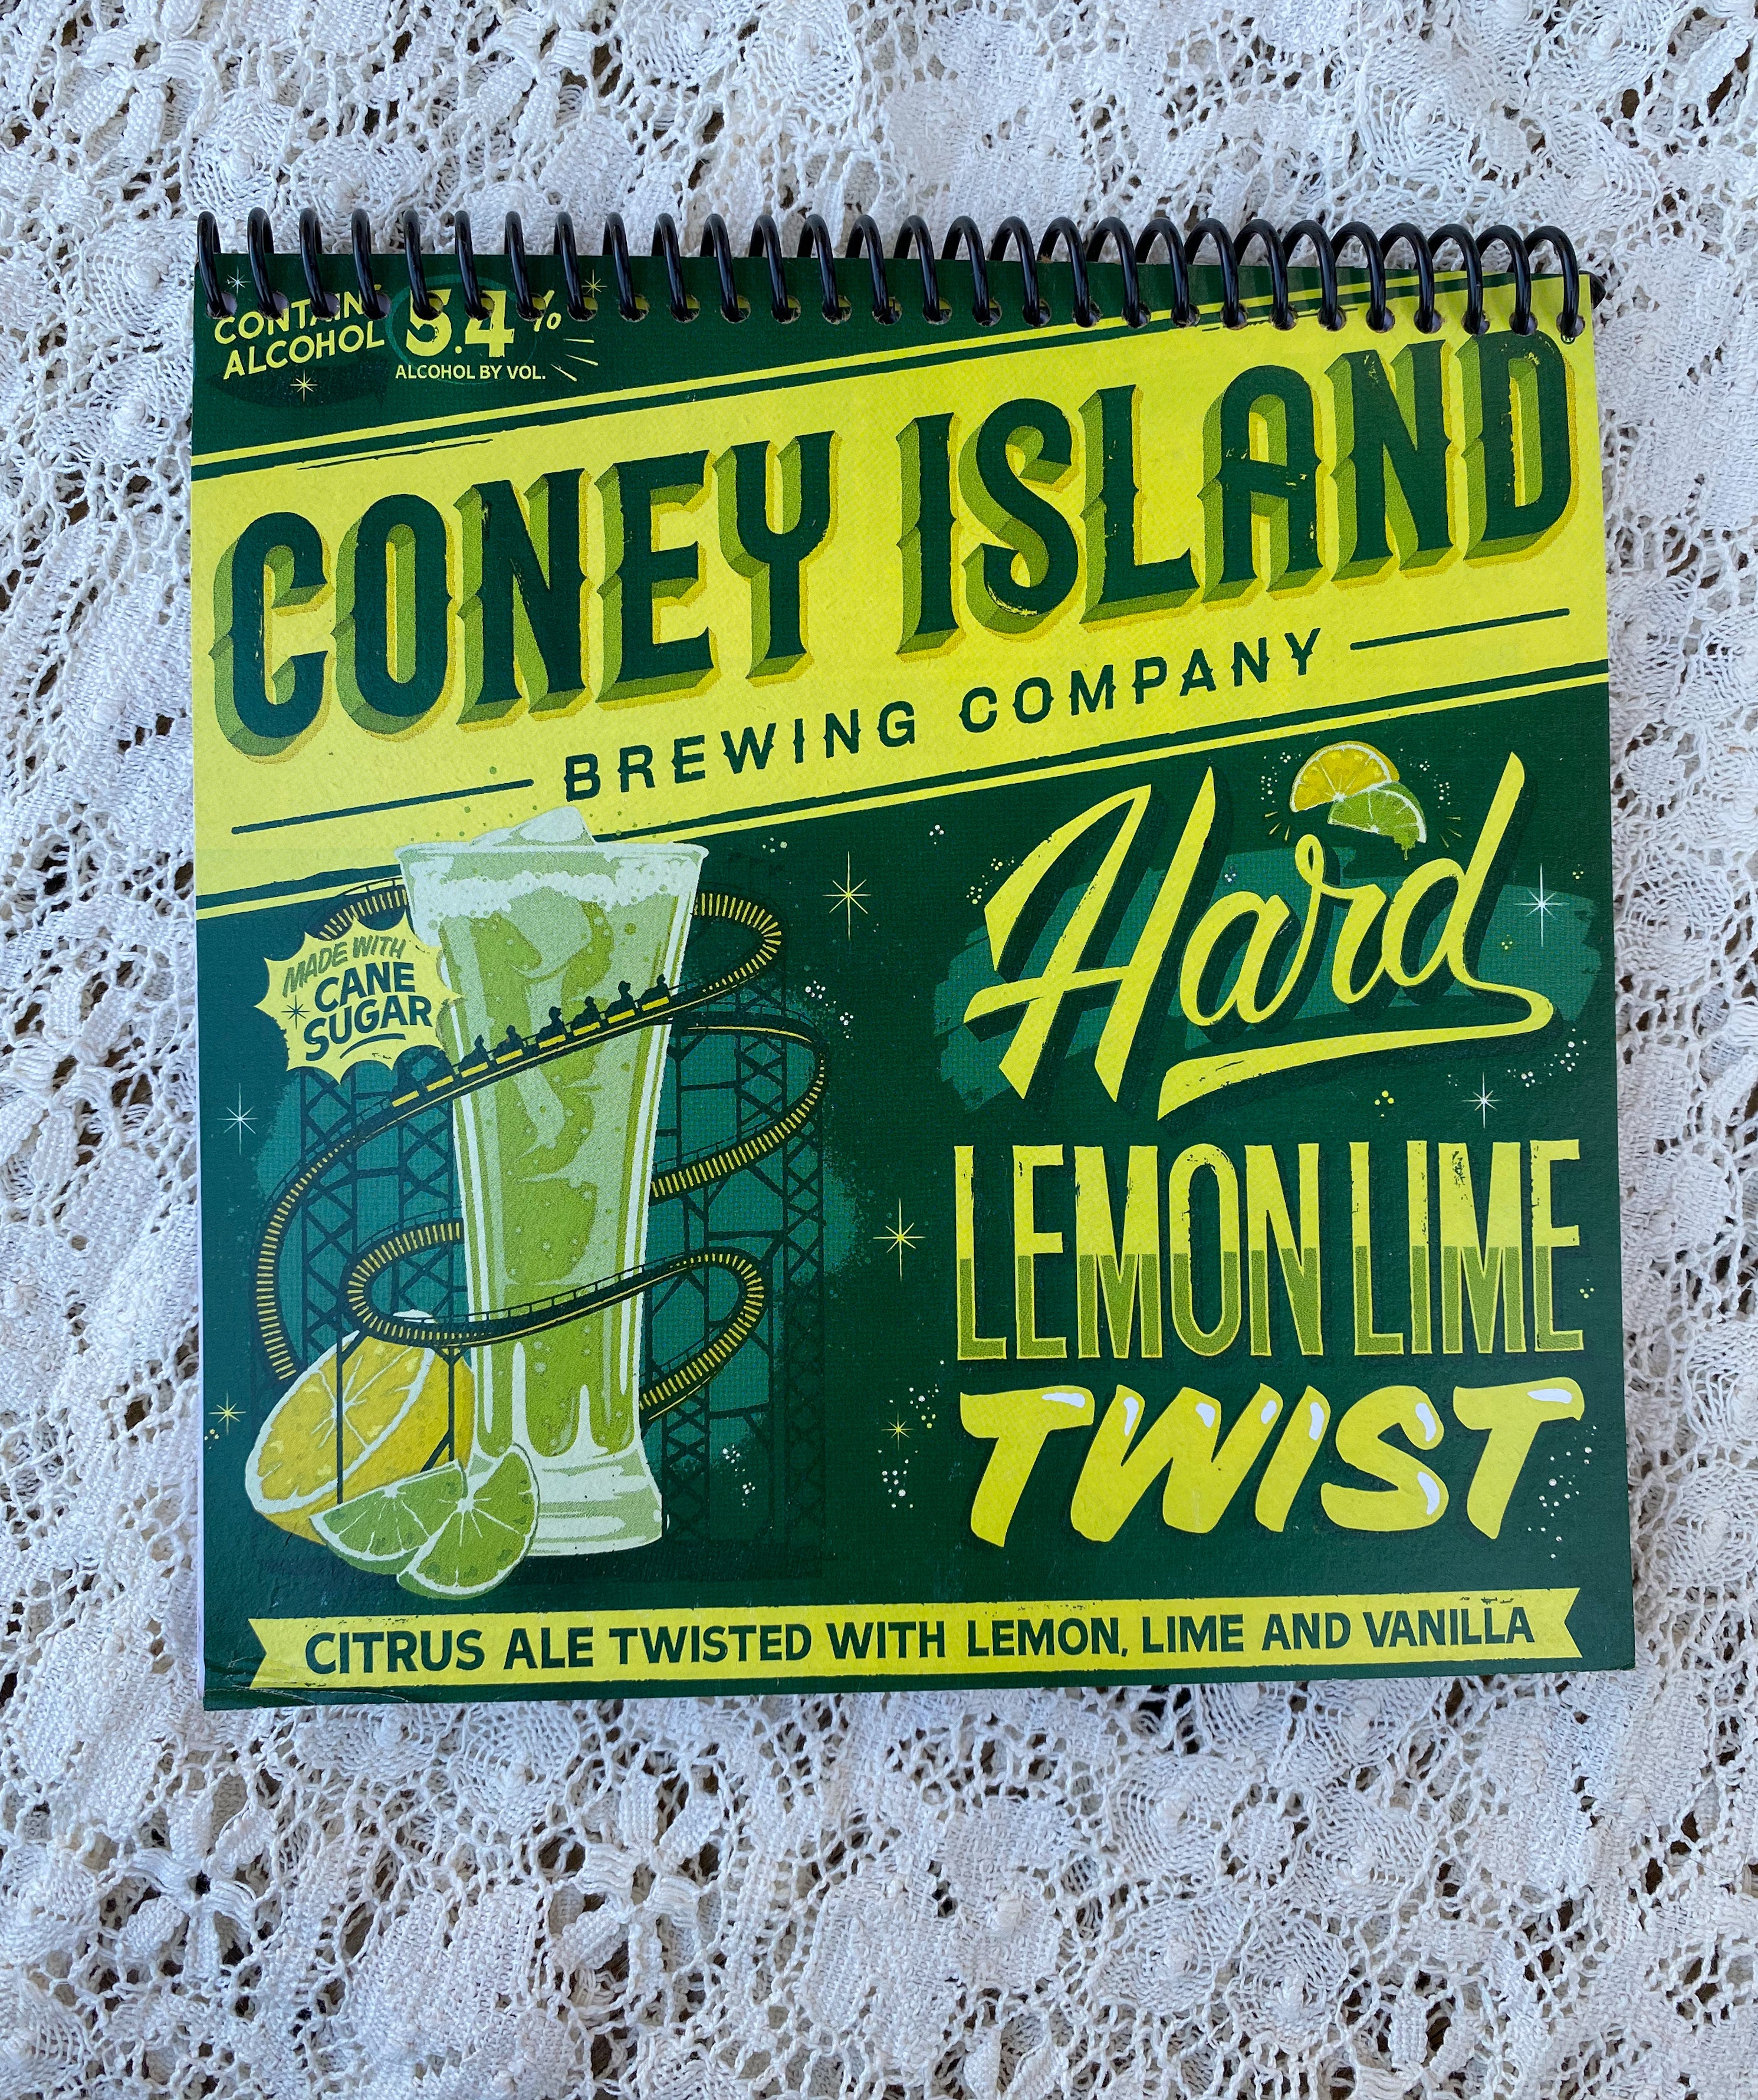 Coney Island Hard Lemon Lime Twist Recycled Beer Carton Notebook